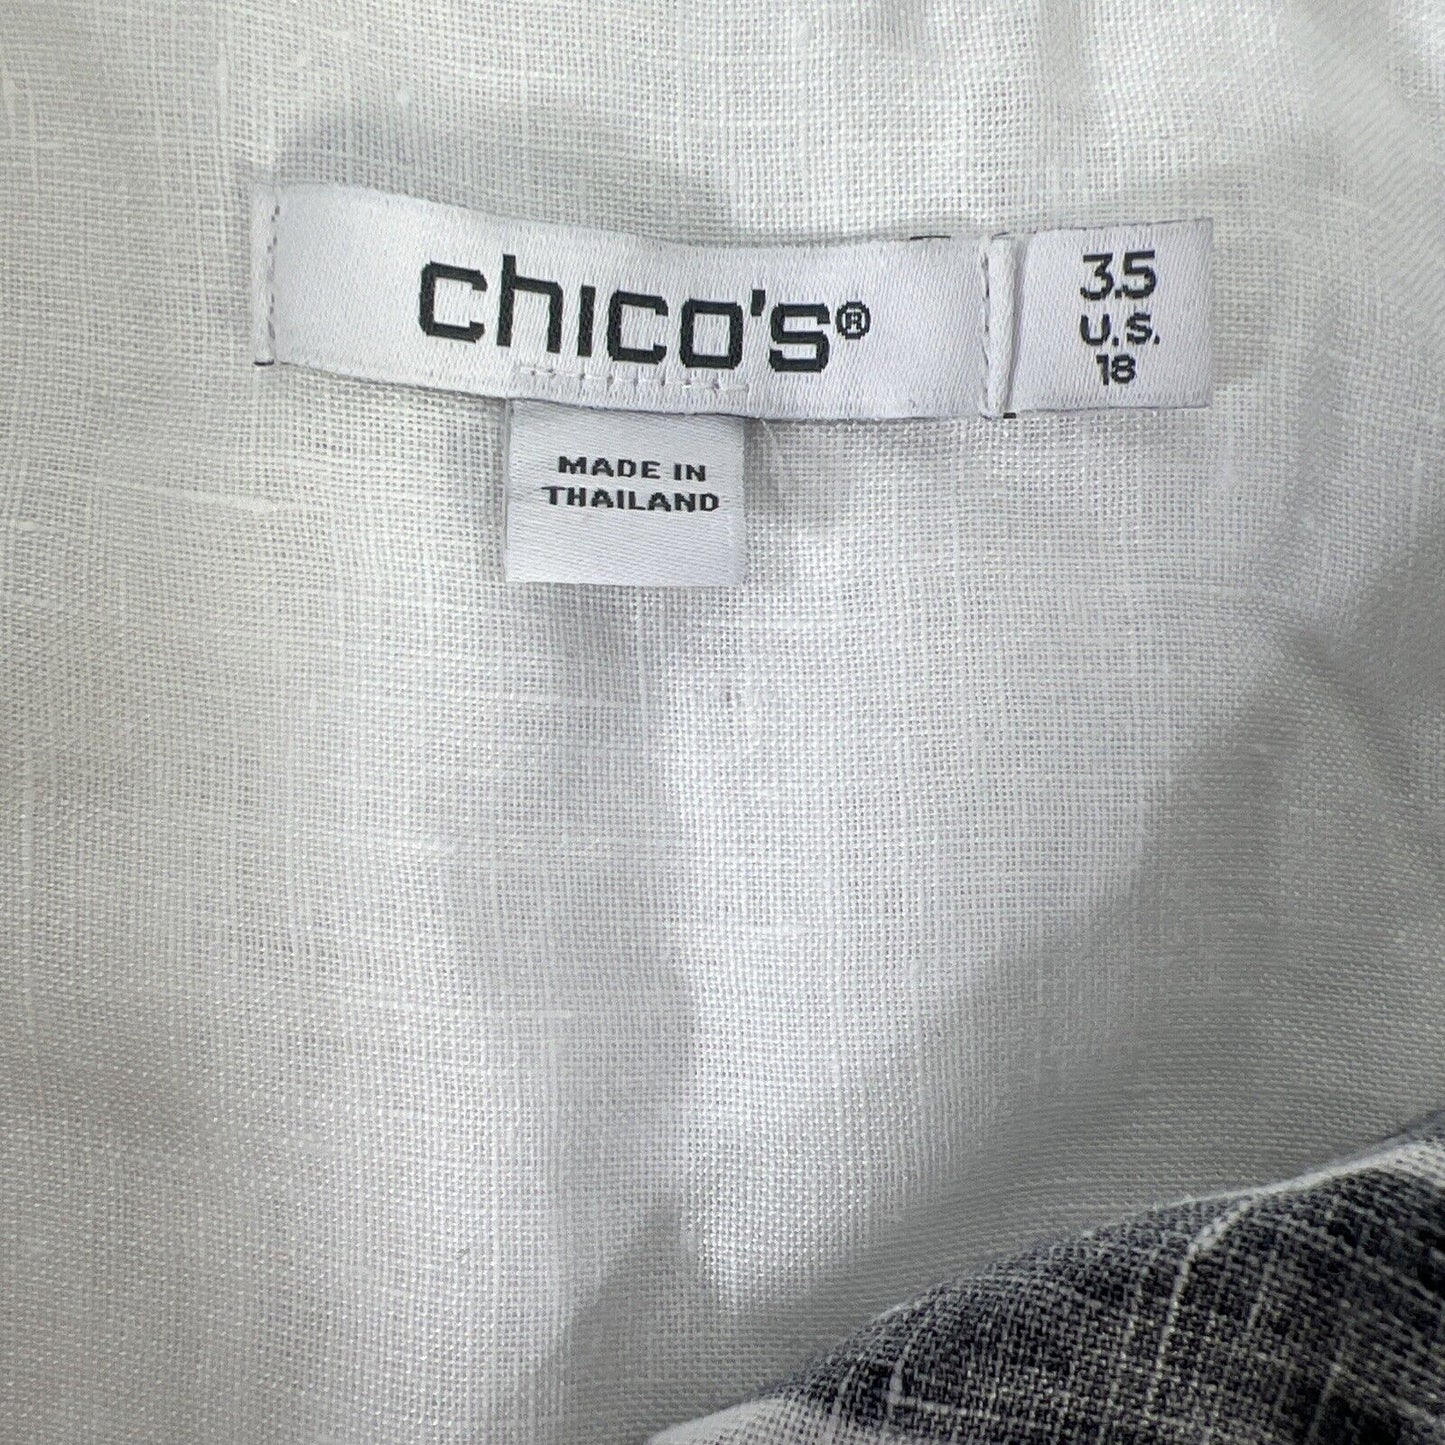 Chico's Women's White 3/4 Sleeve 100% Linen Top - 3.5/US 18